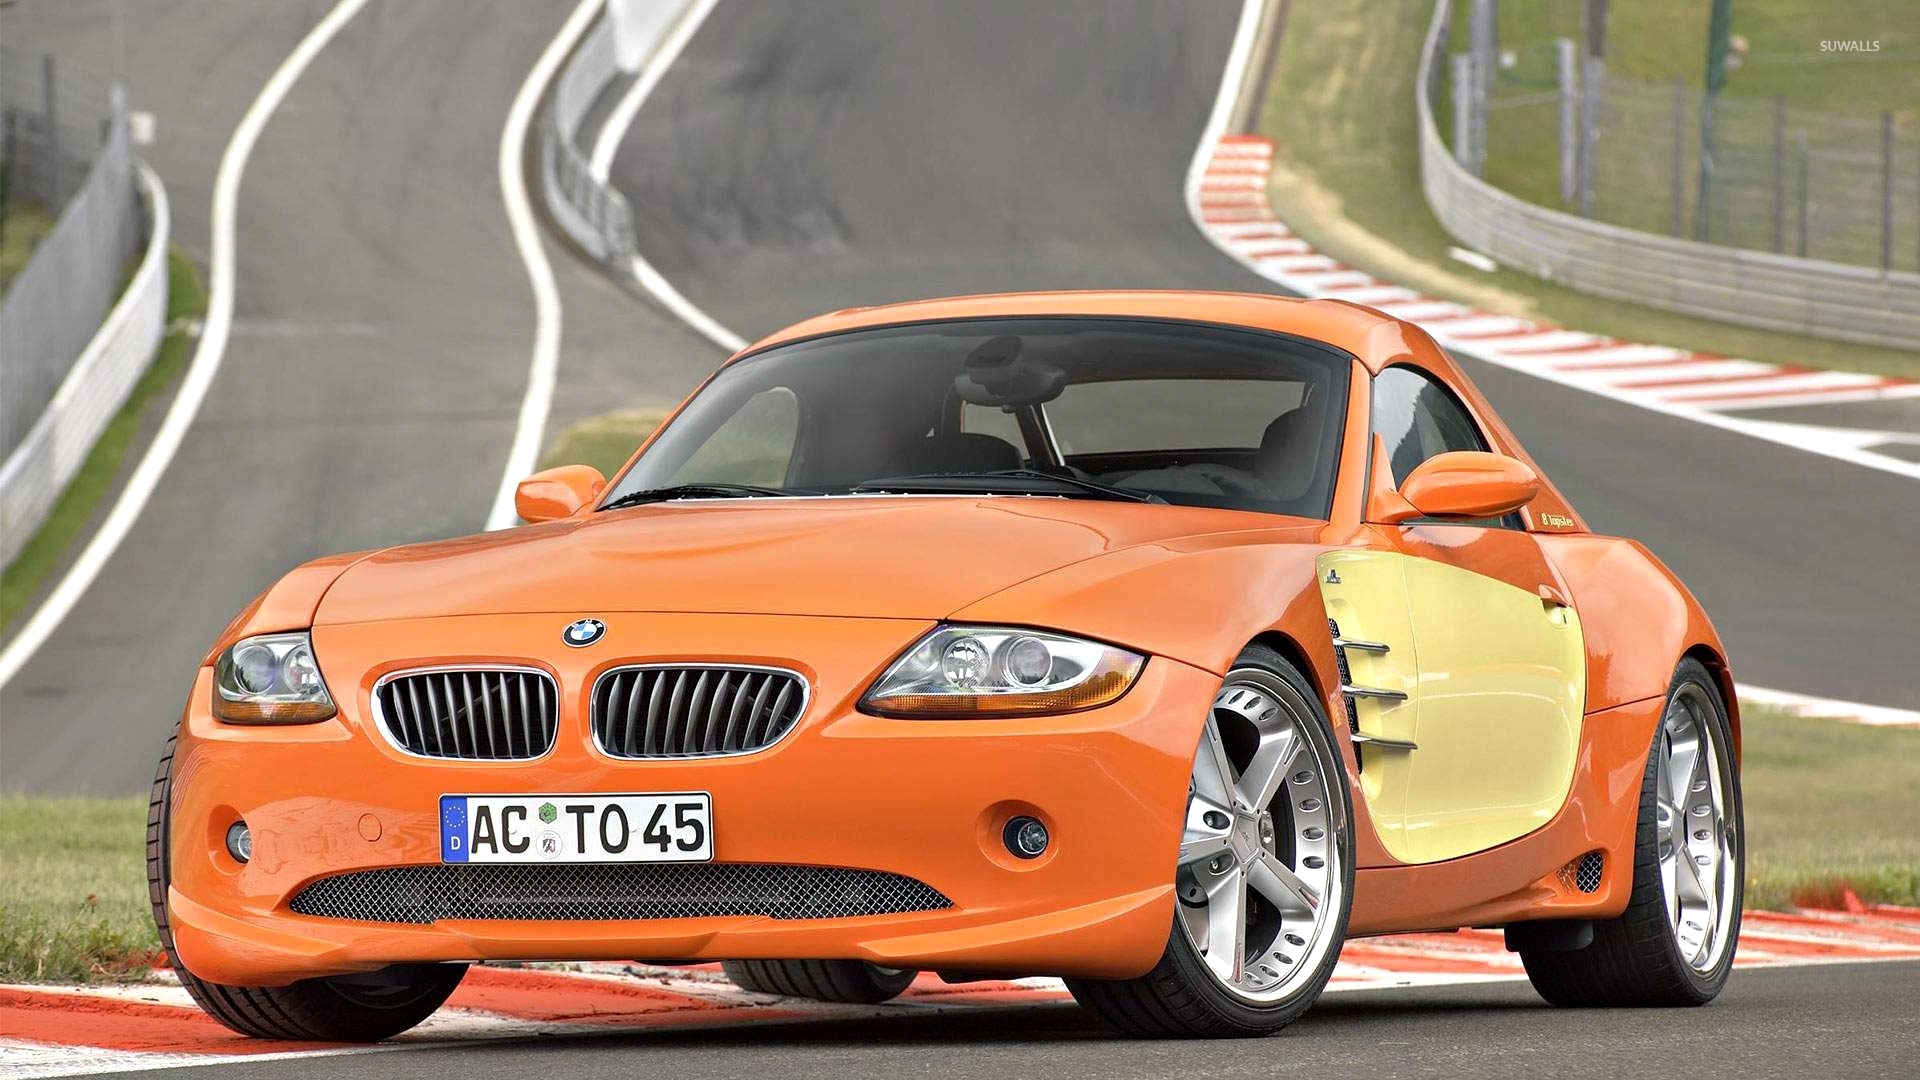 Orange BMW Z4 front view wallpaper - Car wallpapers - #50862